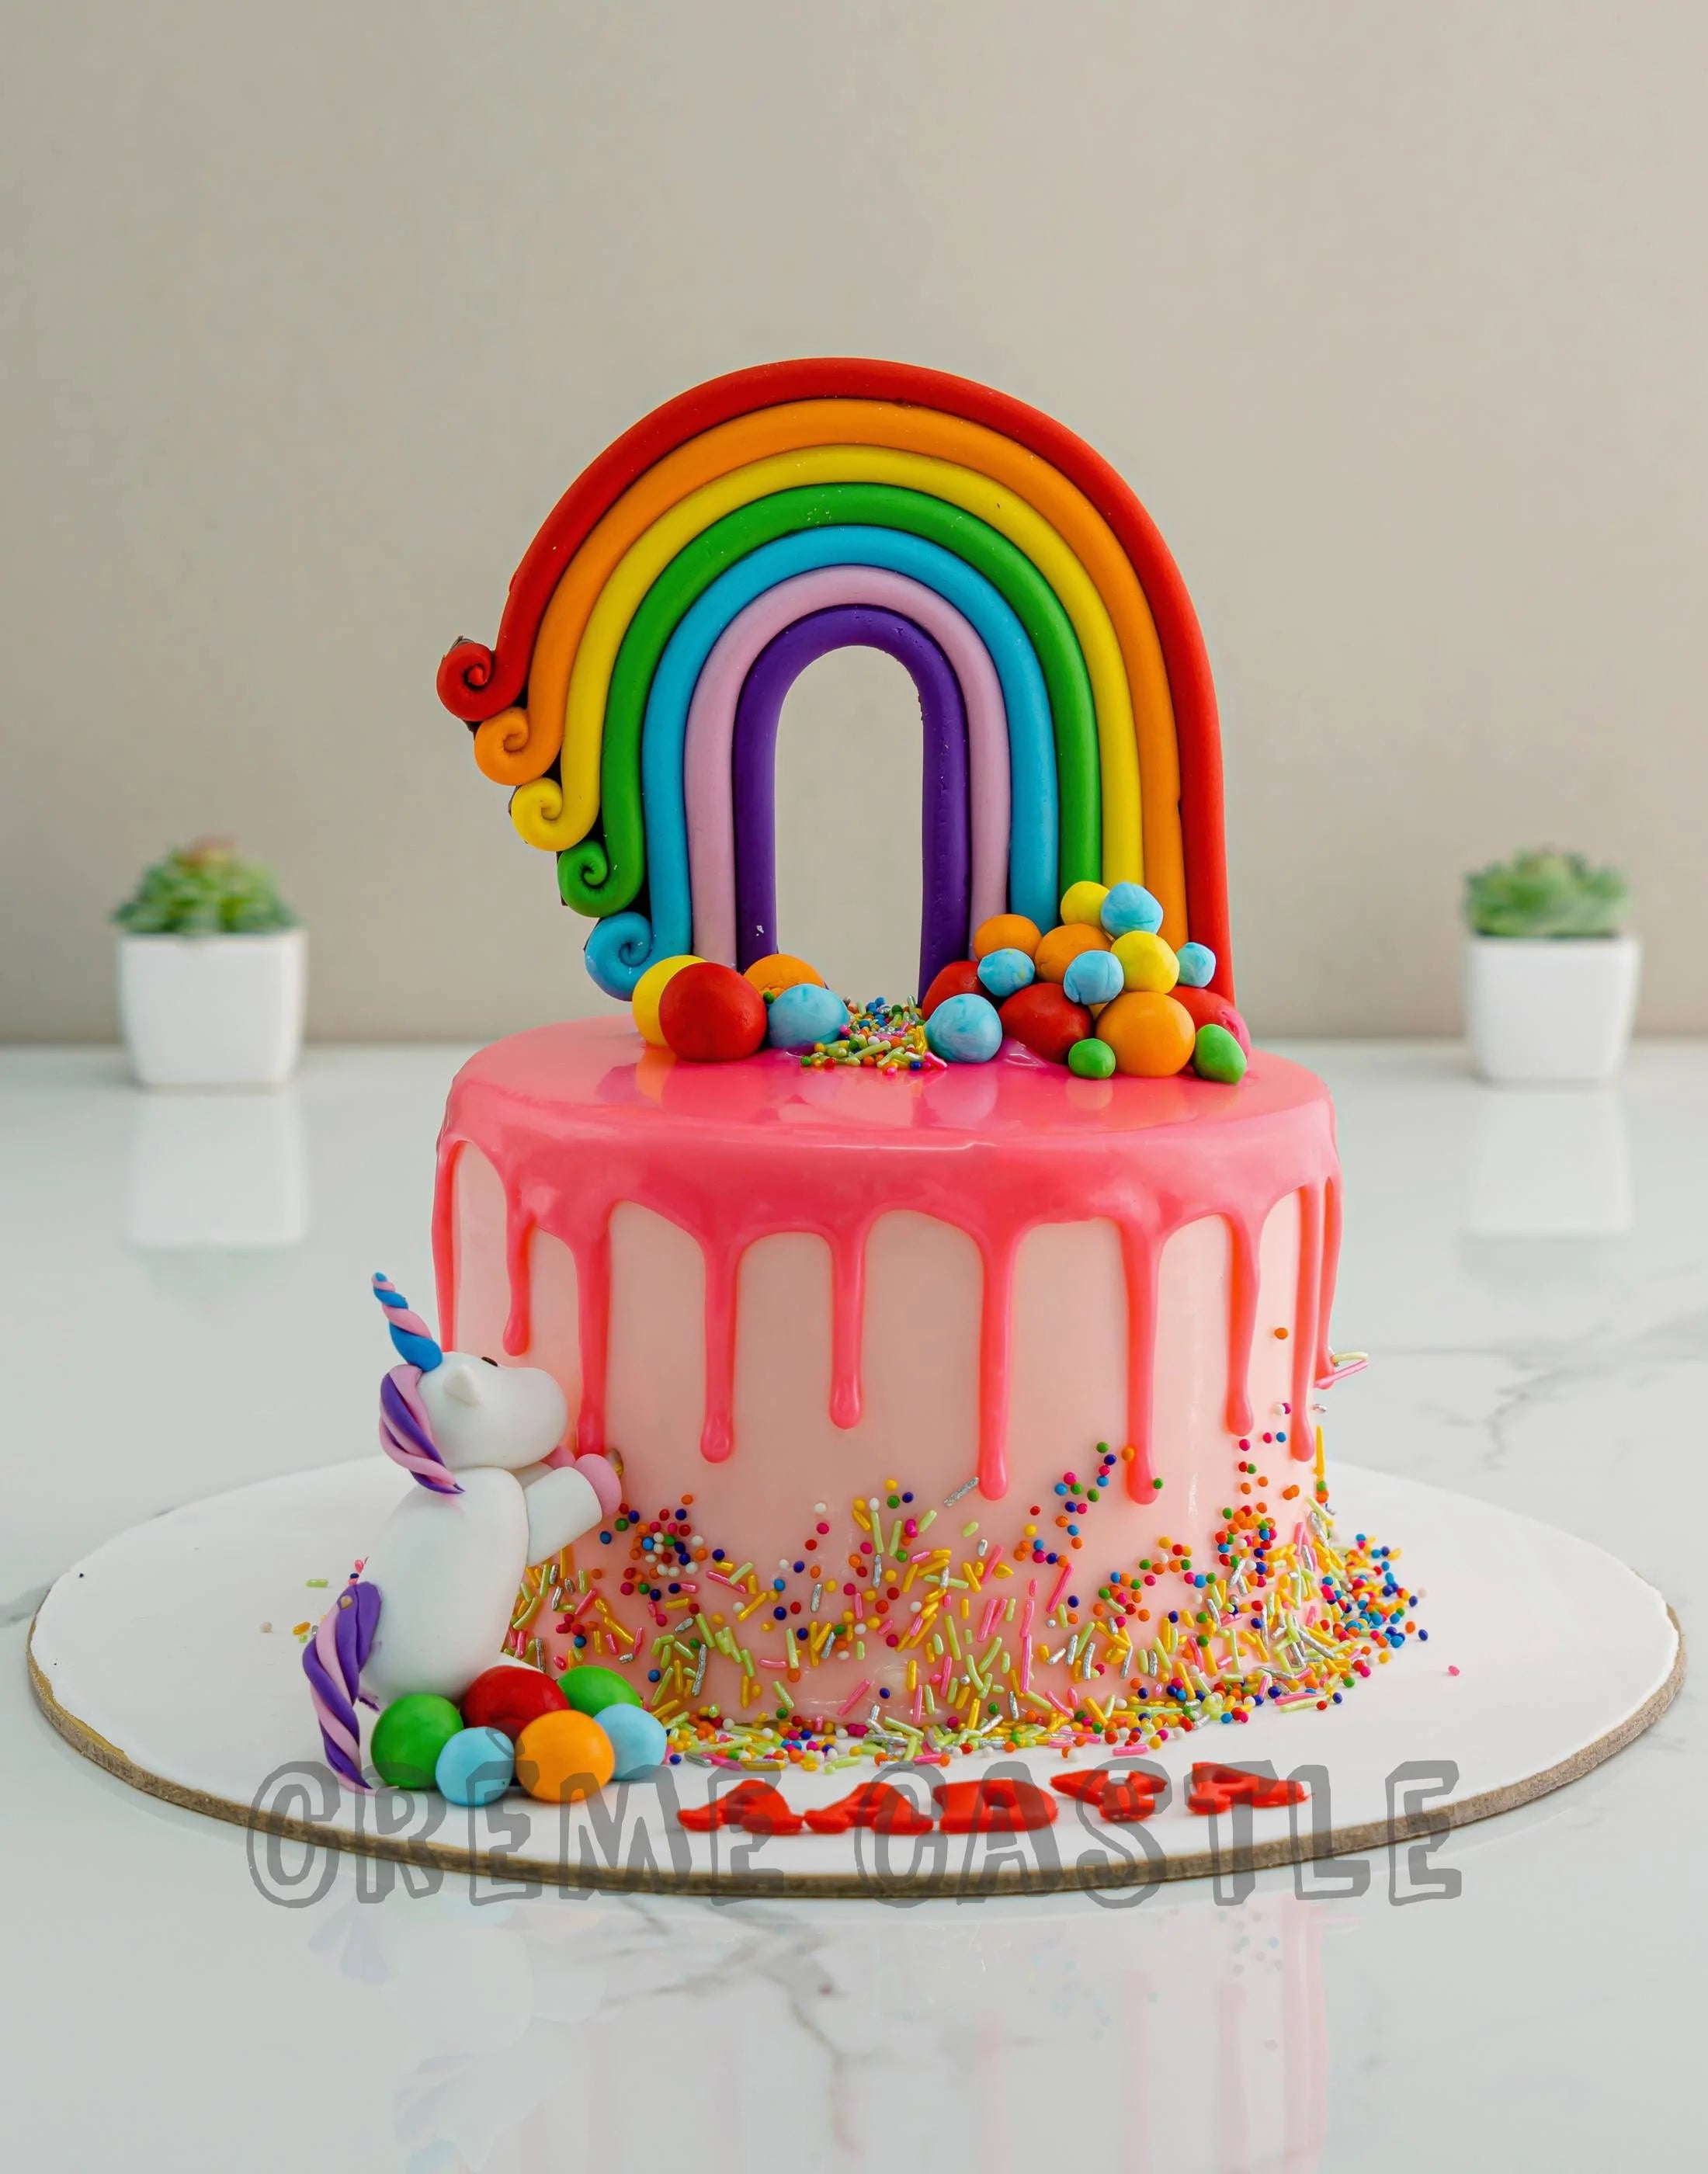 Over the Rainbow Birthday Cake » Birthday Cakes » Cakes For Children